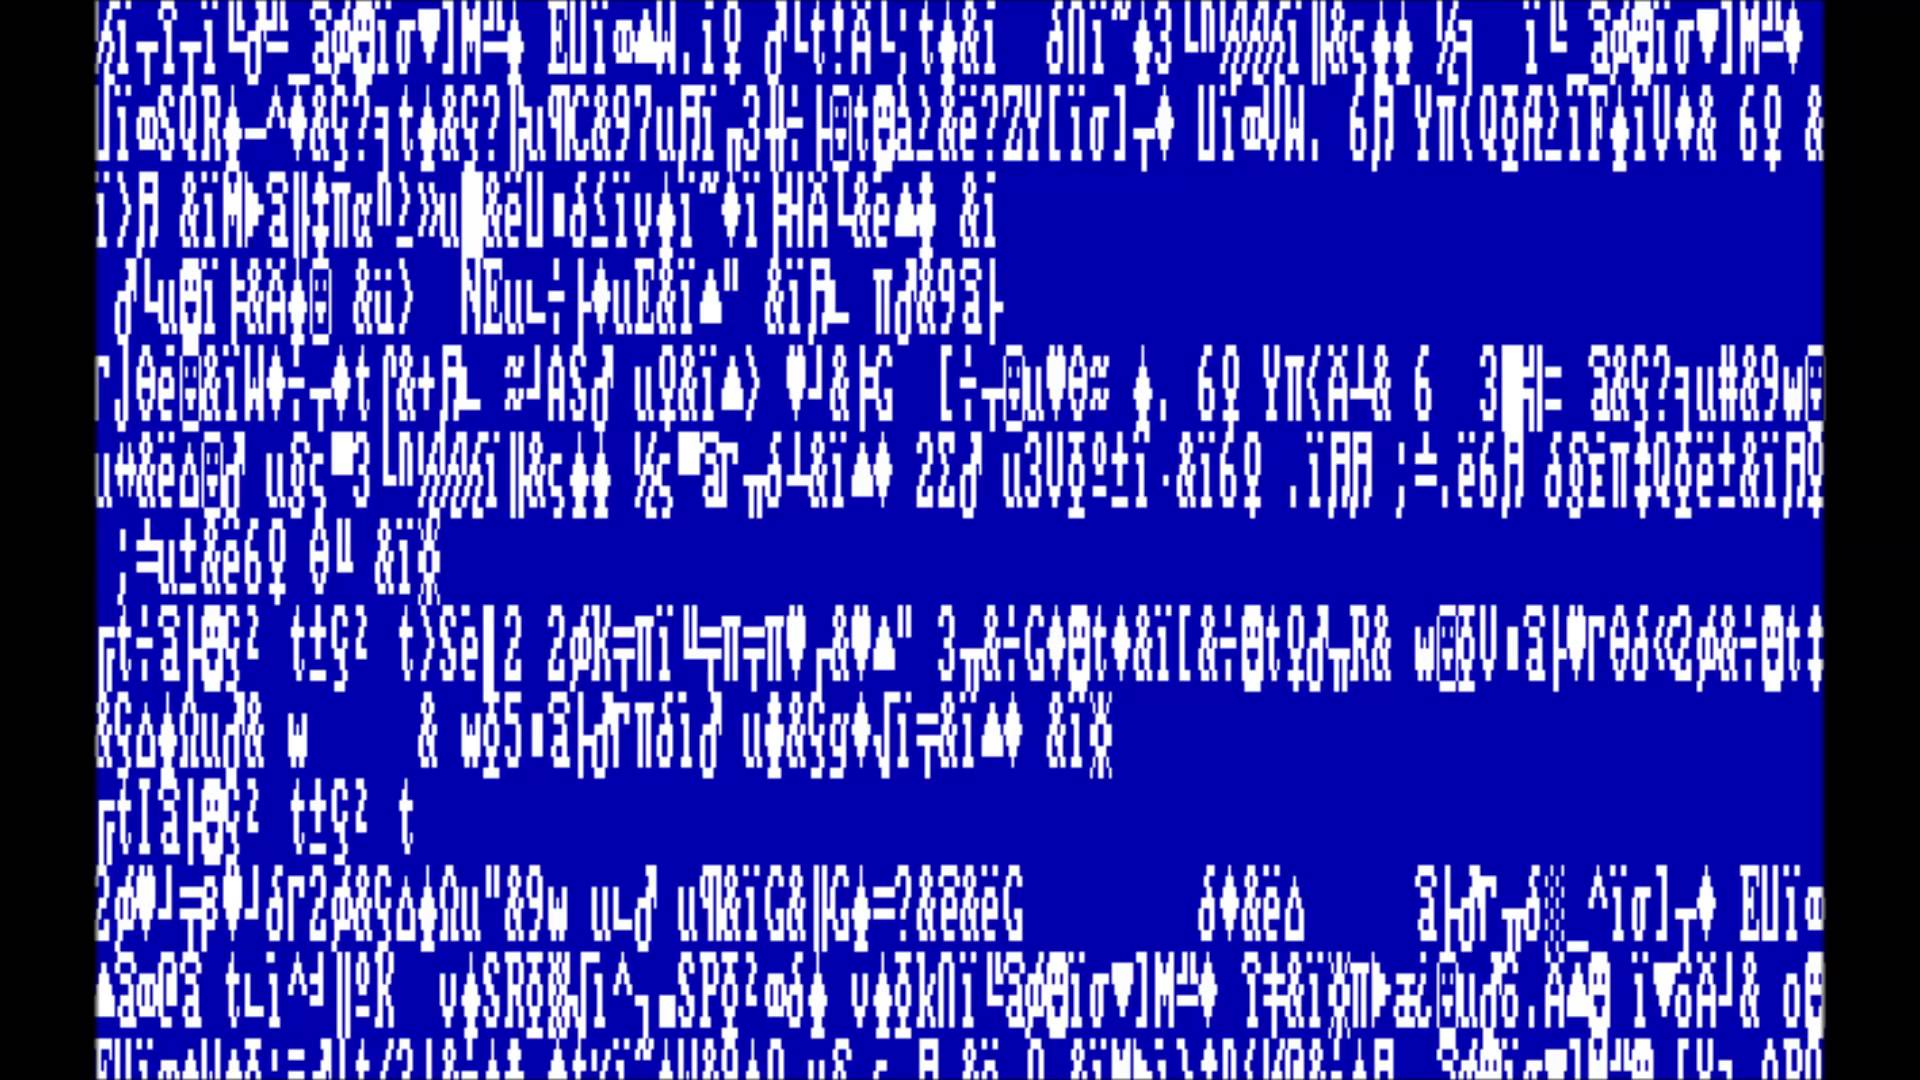 Роблокс синий экран. Синий экран смерти Windows 1. Экран бсод. Экран смерти на виндовс 1.0. Синий экран смерти Windows 1.0.